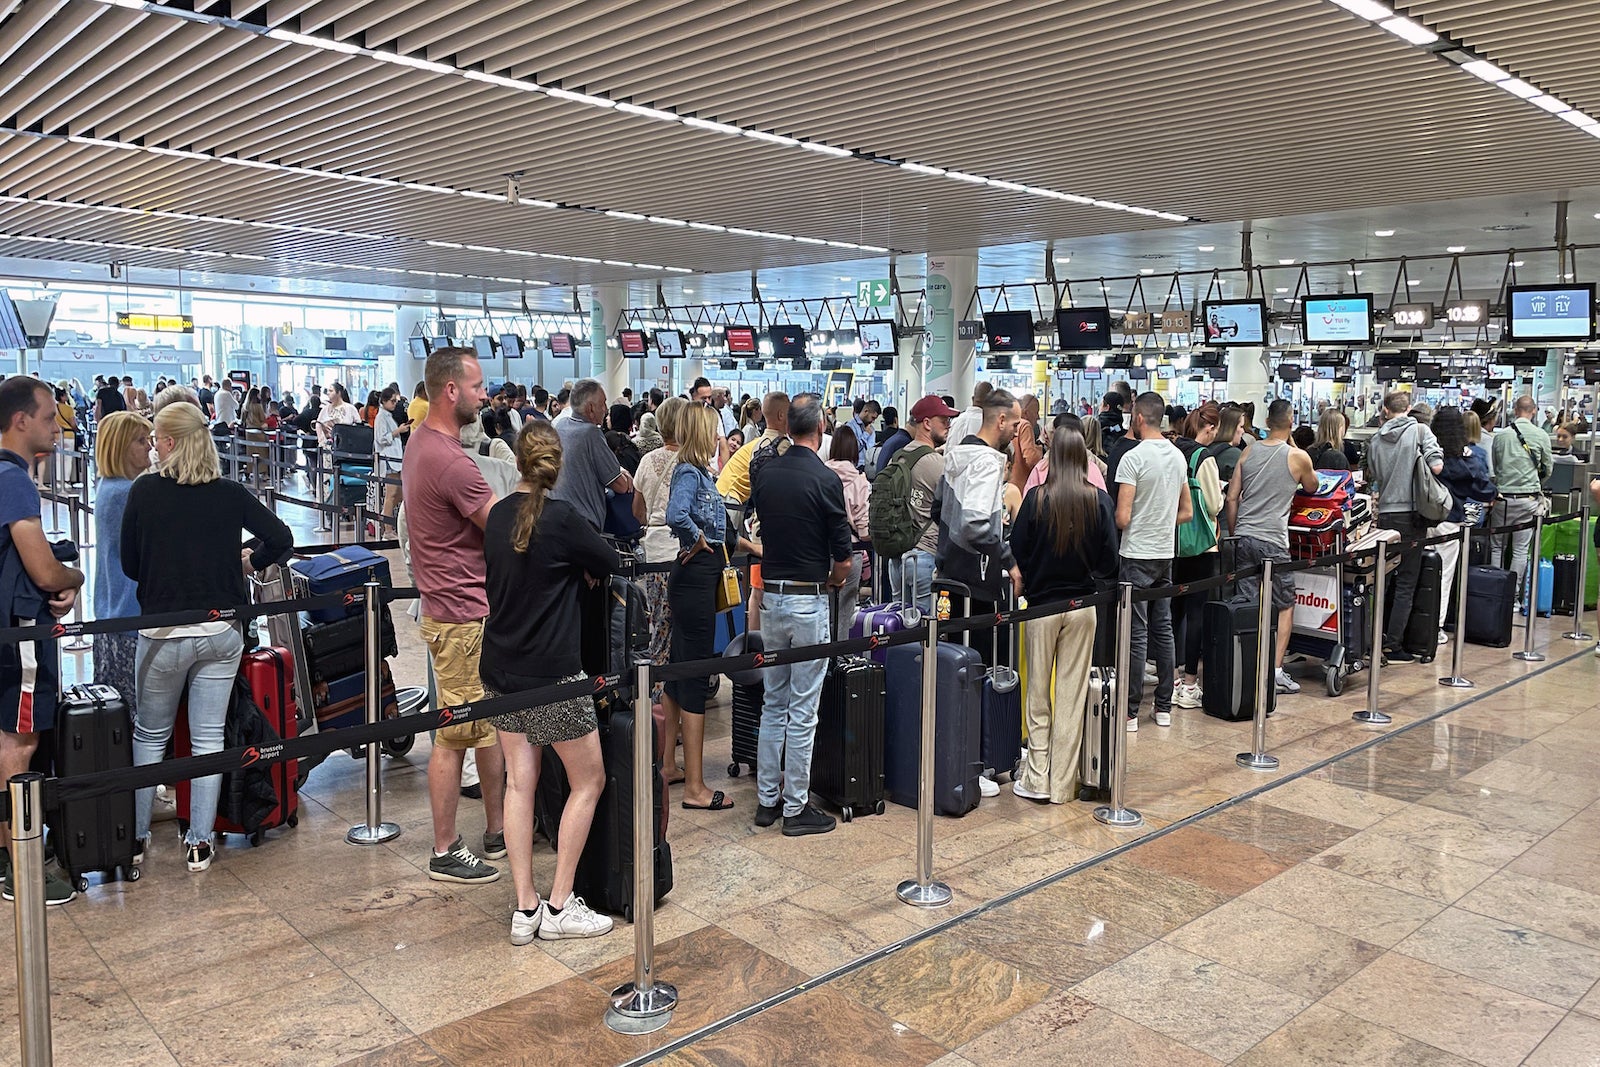 long line at airport in customs